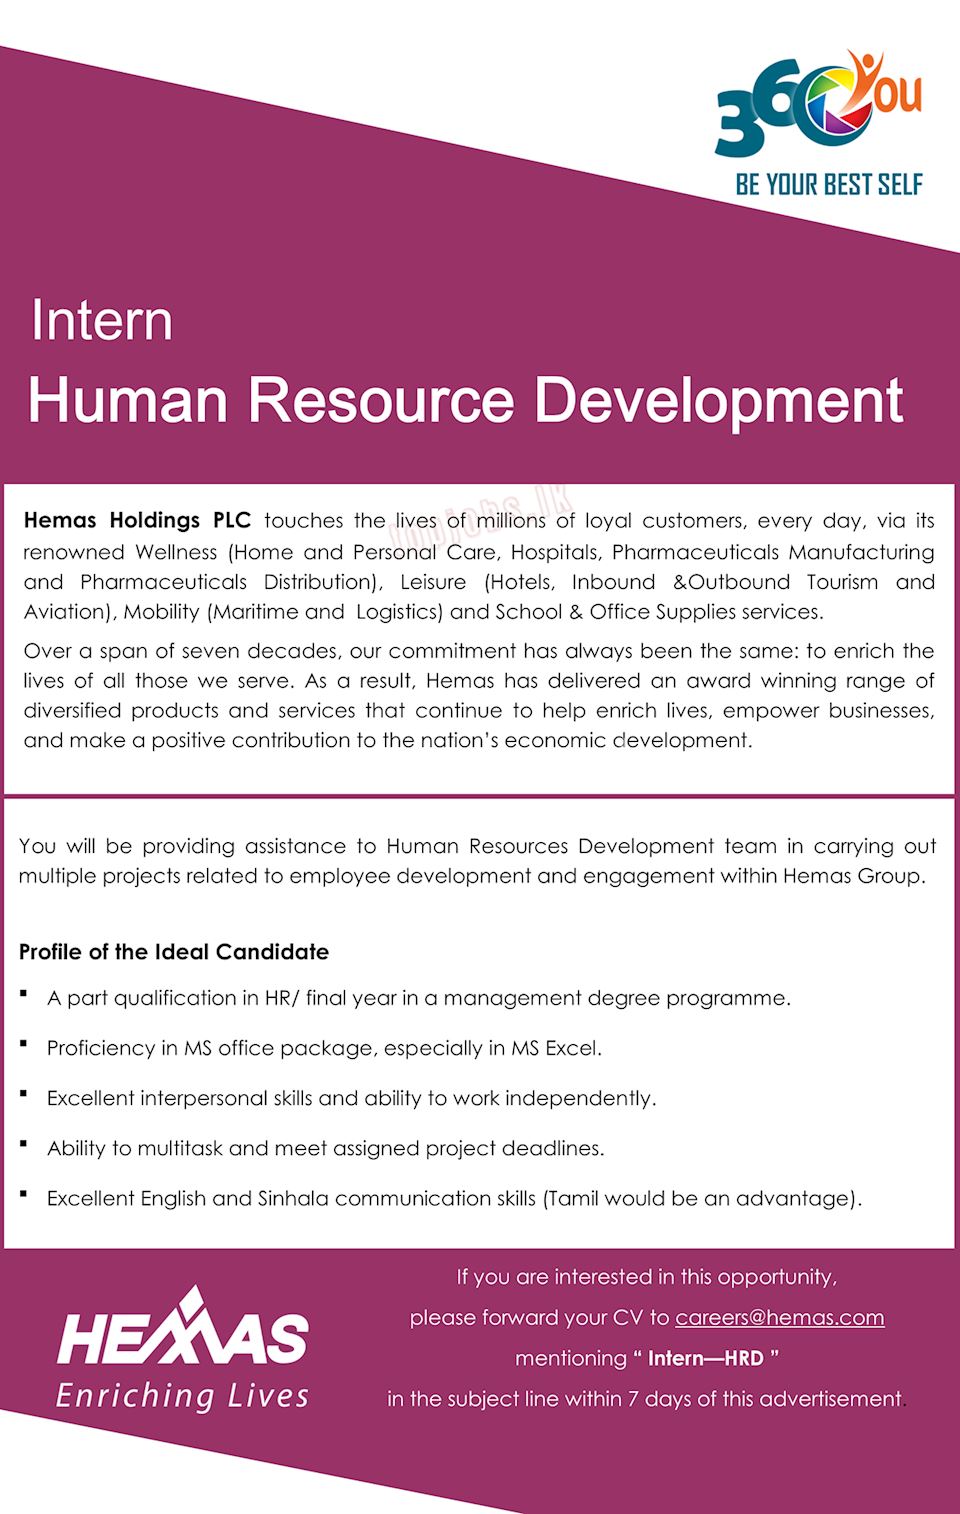 Intern - Human Resource Development 